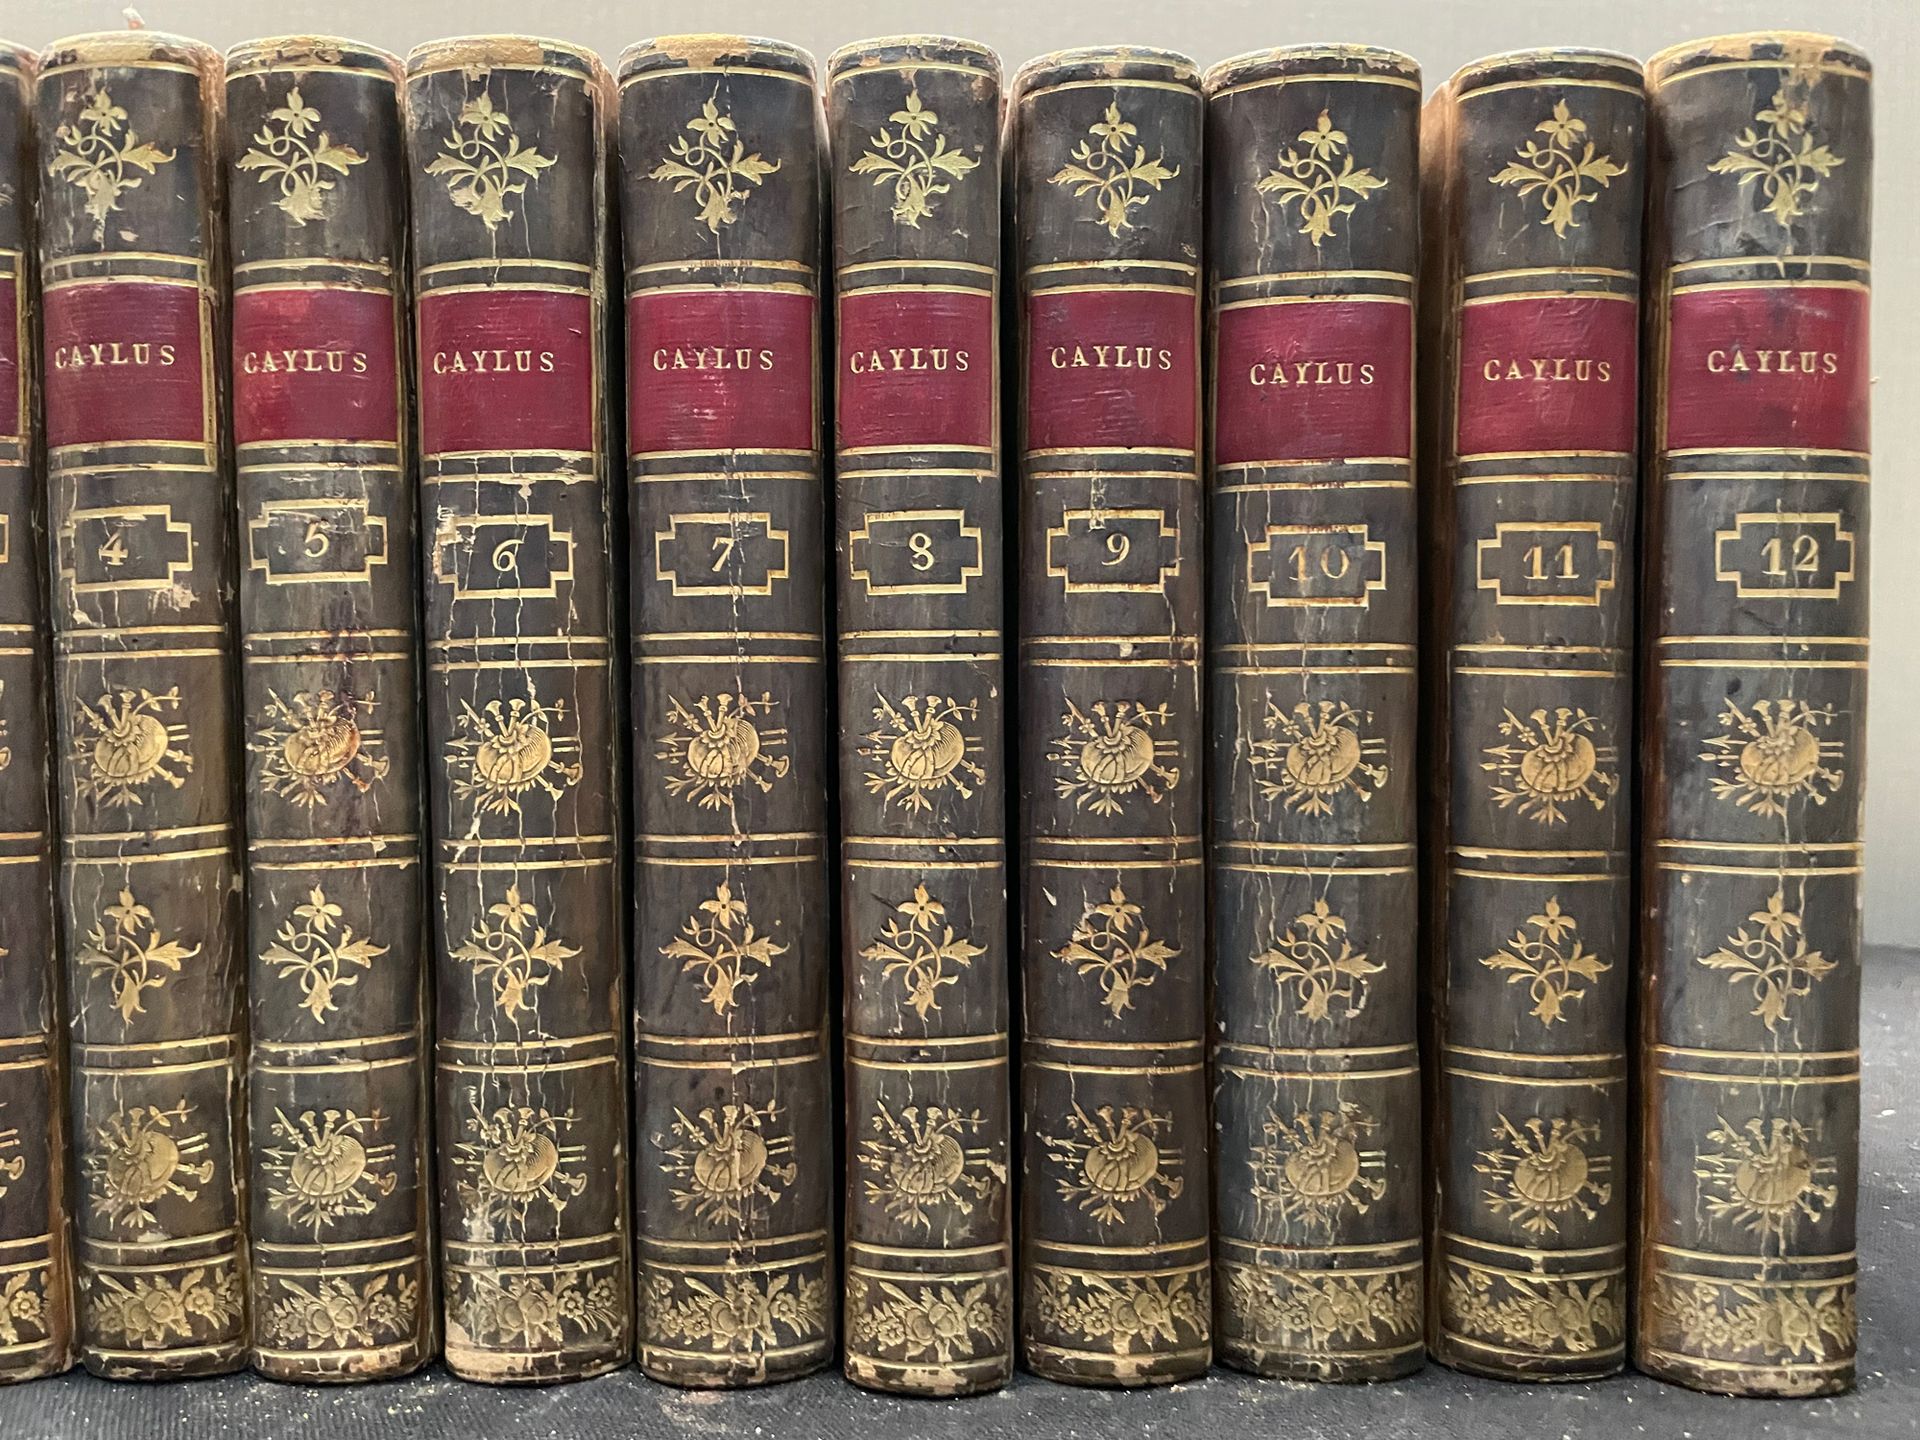 CAYLUS Oeuvres badines
Amsterdam, M. DCC. LXXXVII 12 volumi (come è)